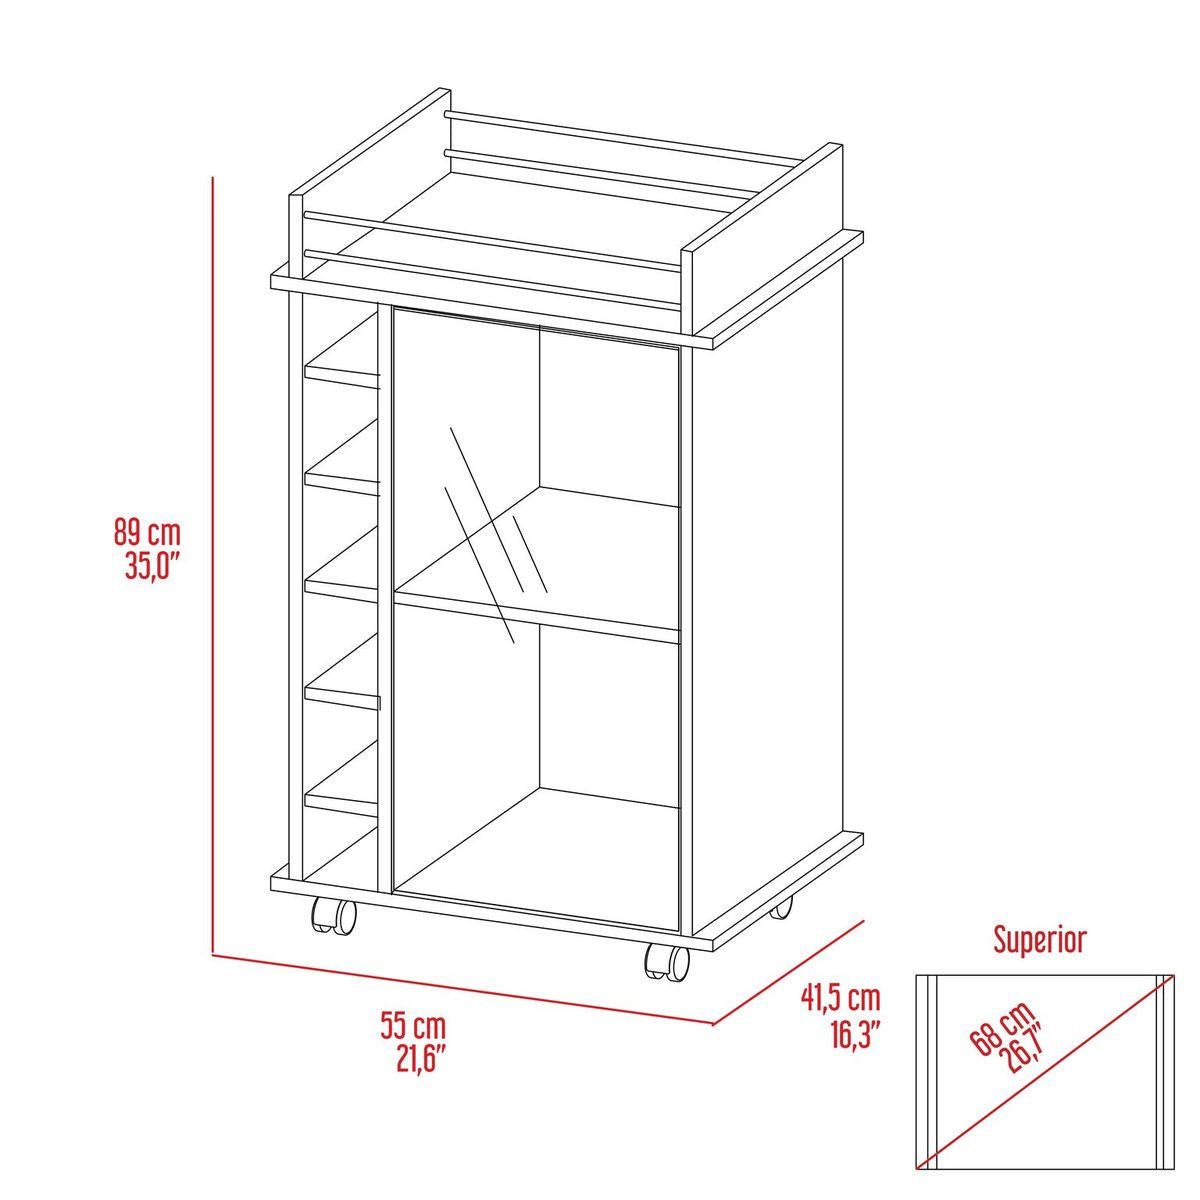 24" White Bar Cabinet With Multiple Shelves